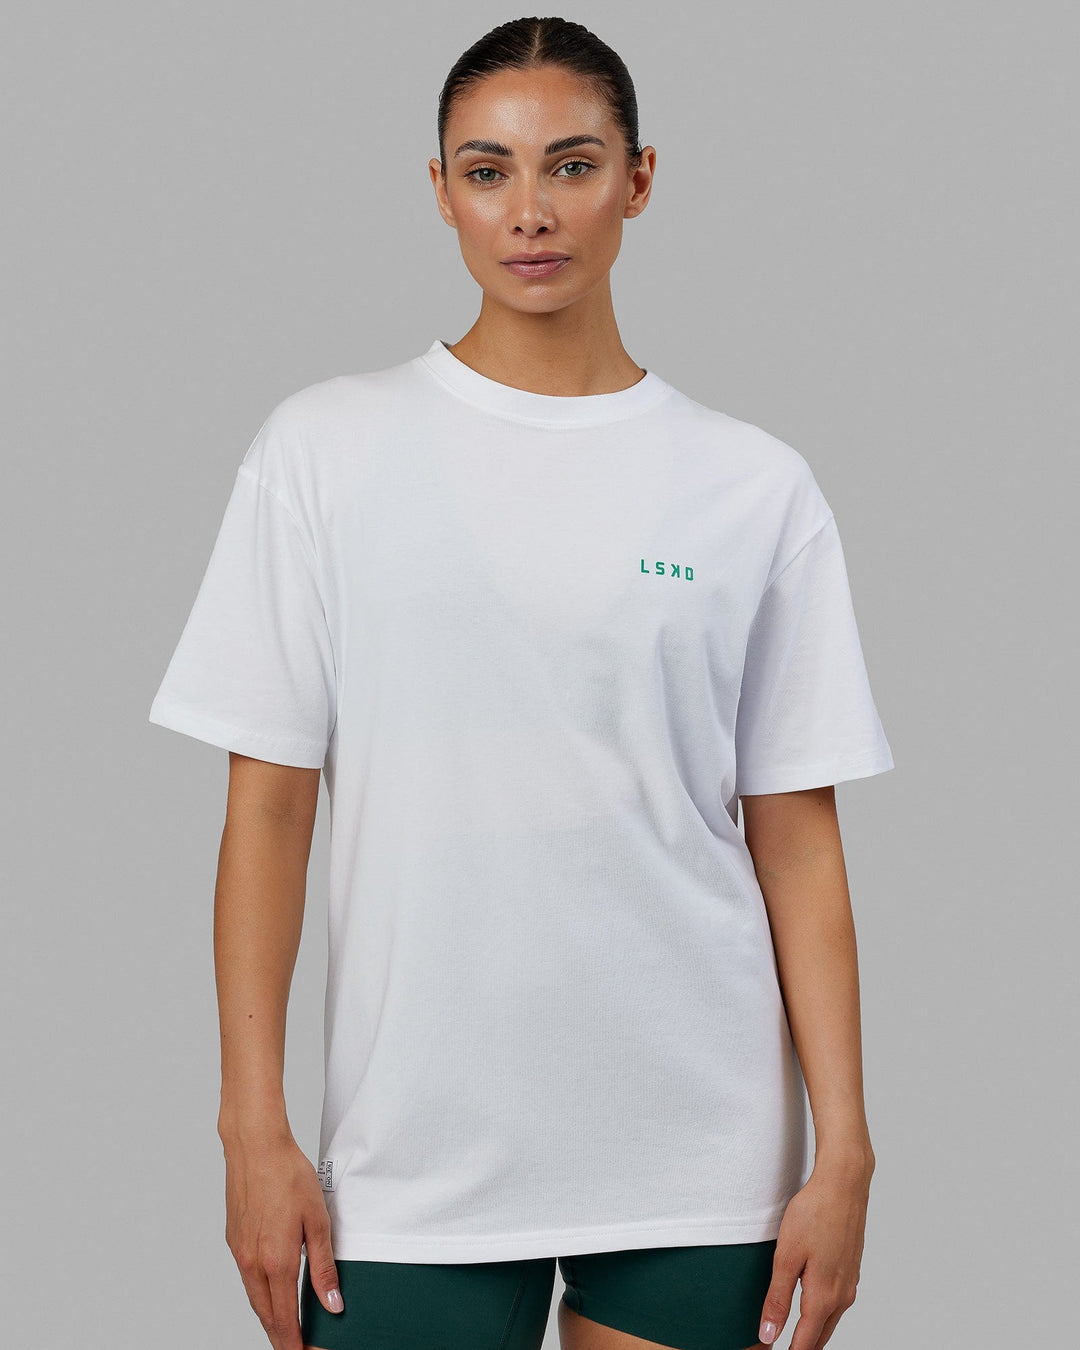 Woman wearing Unisex VS3 FLXCotton Tee Oversize - White-Green Tambourine